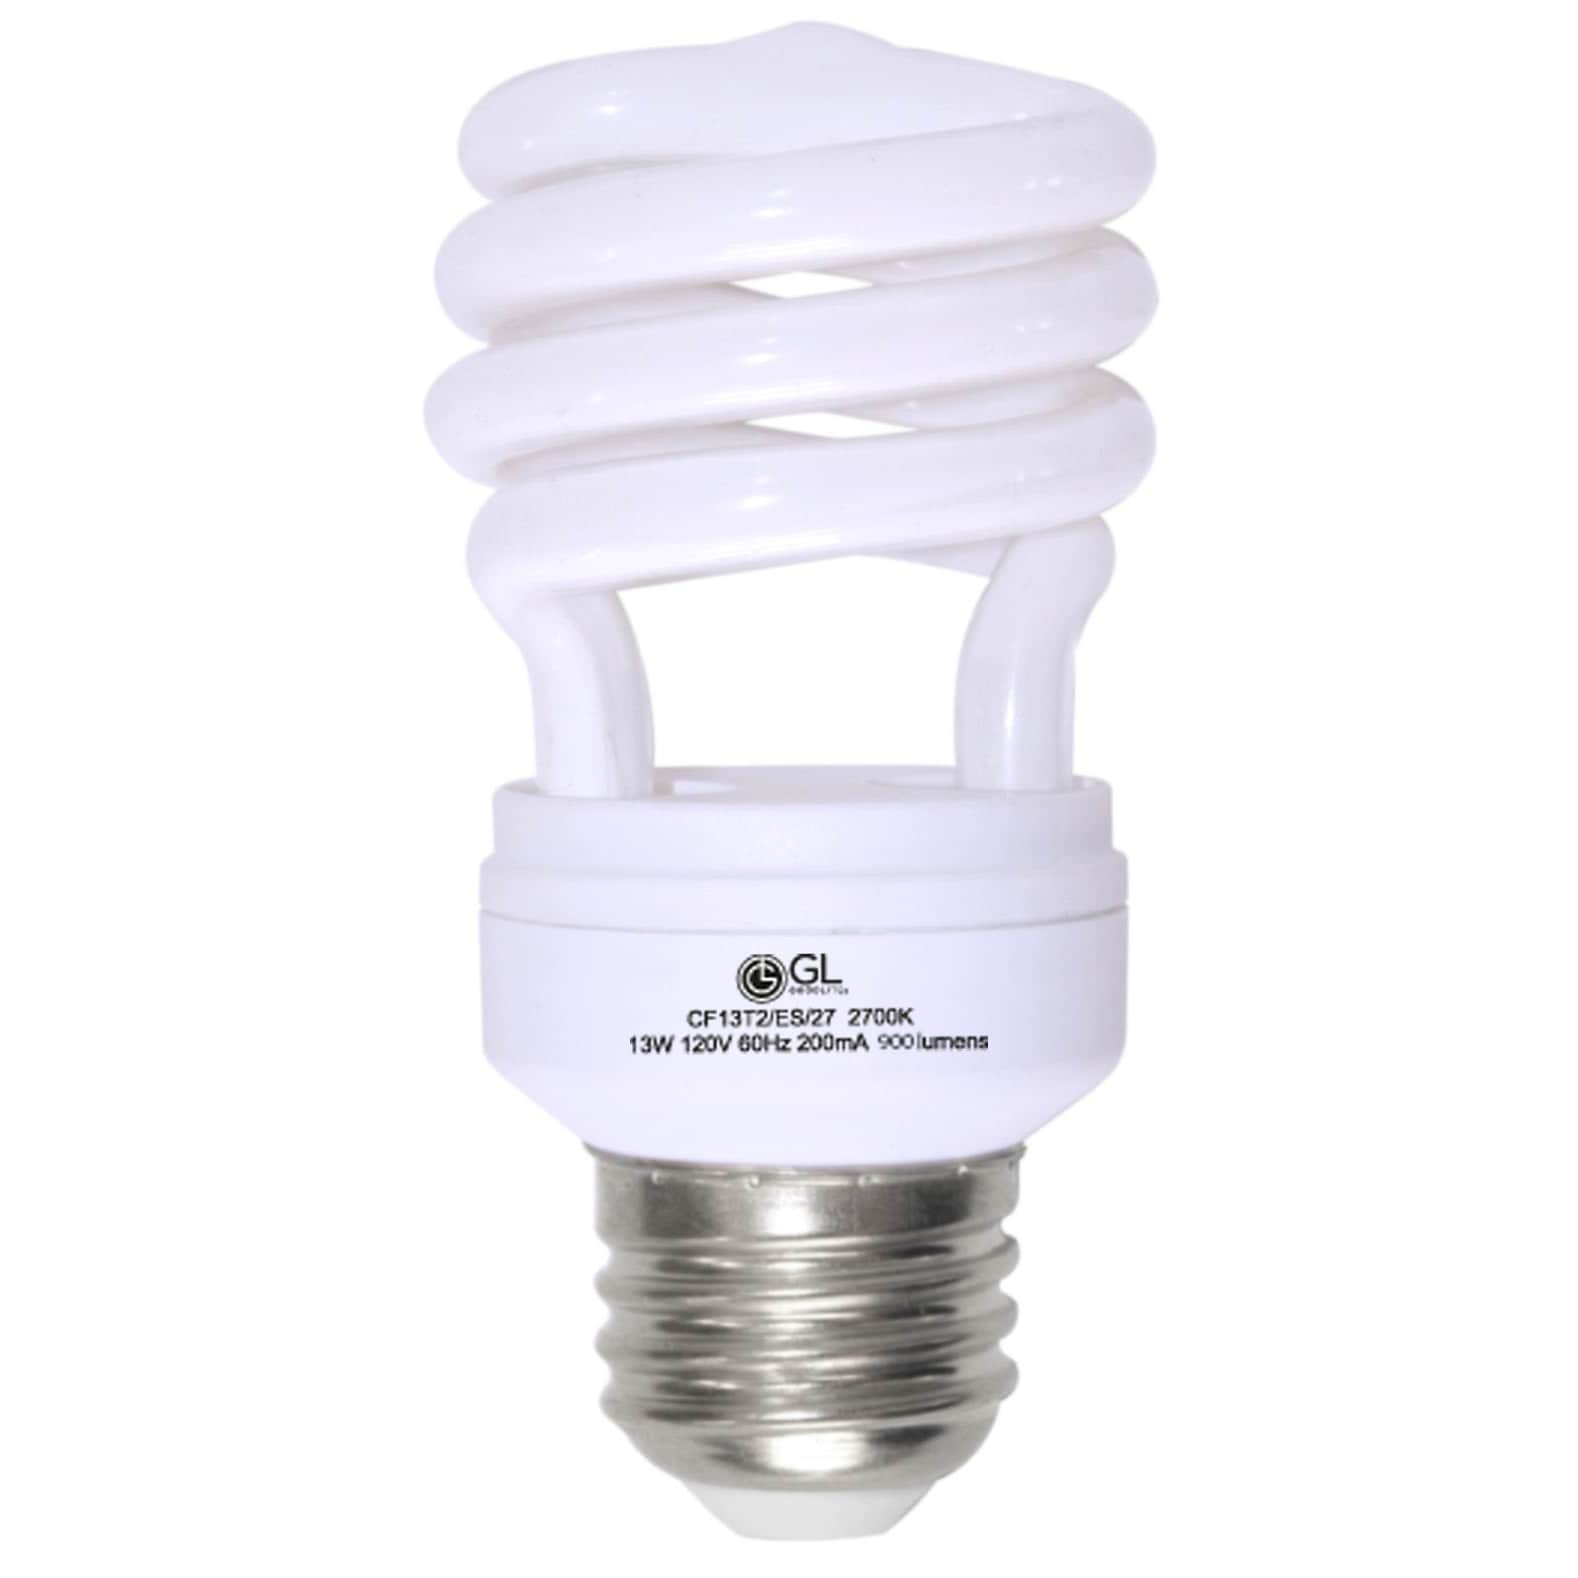 Compact Fluorescent Light Bulb T2 Spiral CFL 120V UL Listed 900 Lumens E26 Medium Base 60 Watt Equivalent Pack of 4 2700k Soft White 13W 